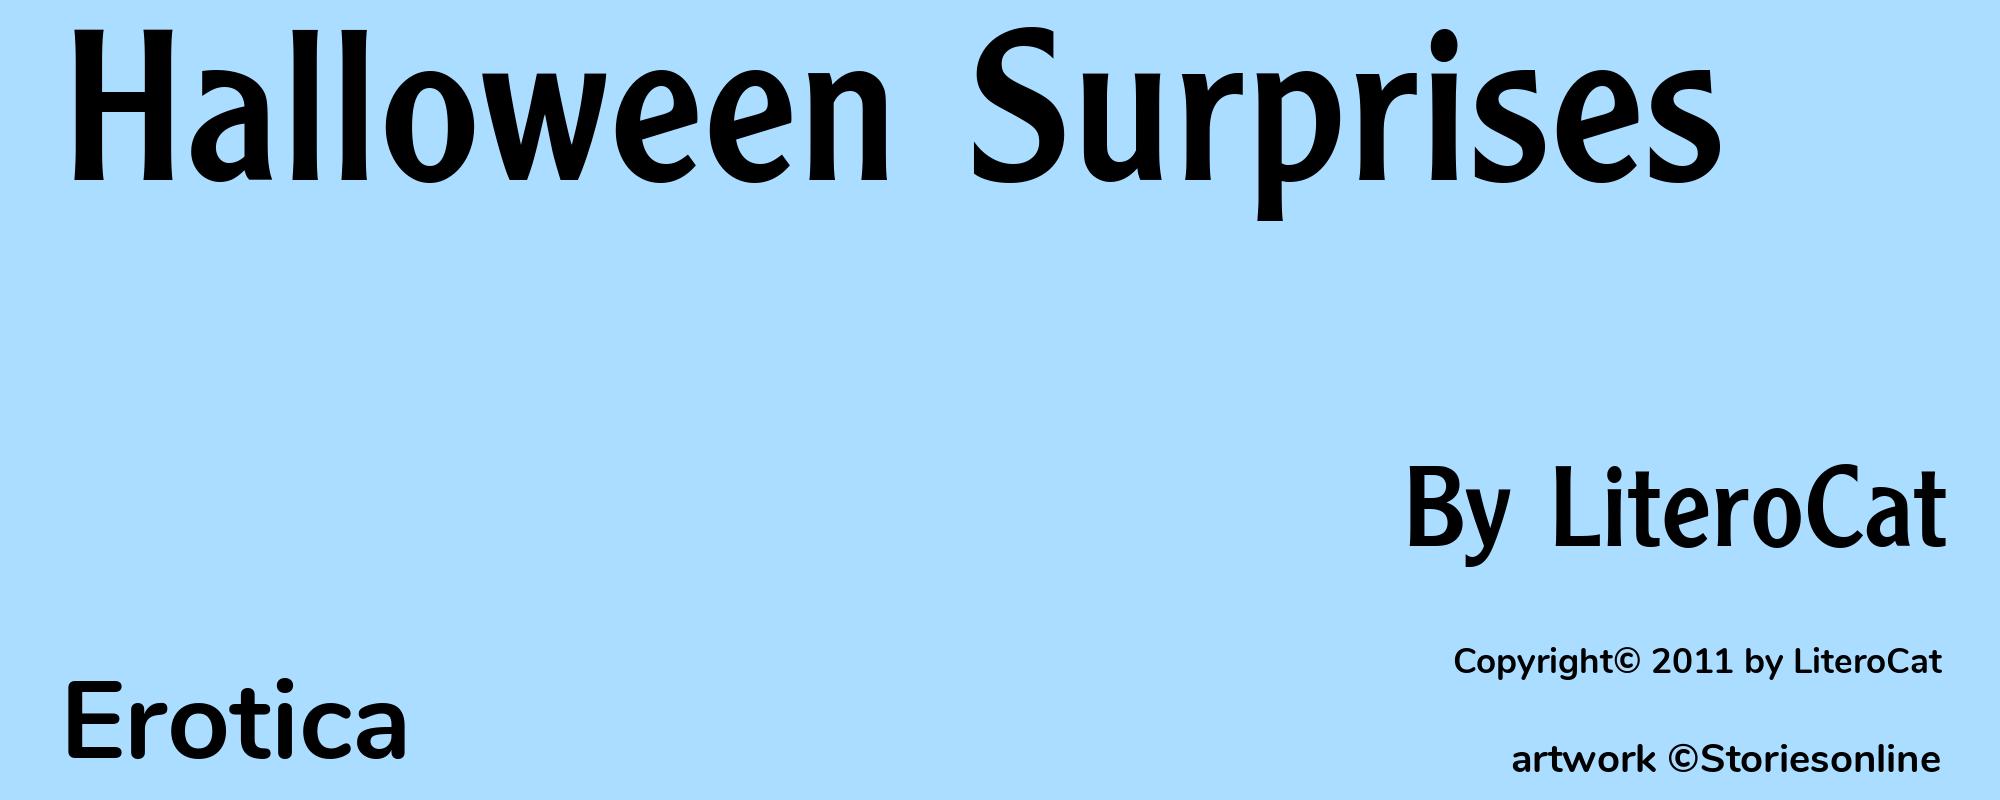 Halloween Surprises - Cover